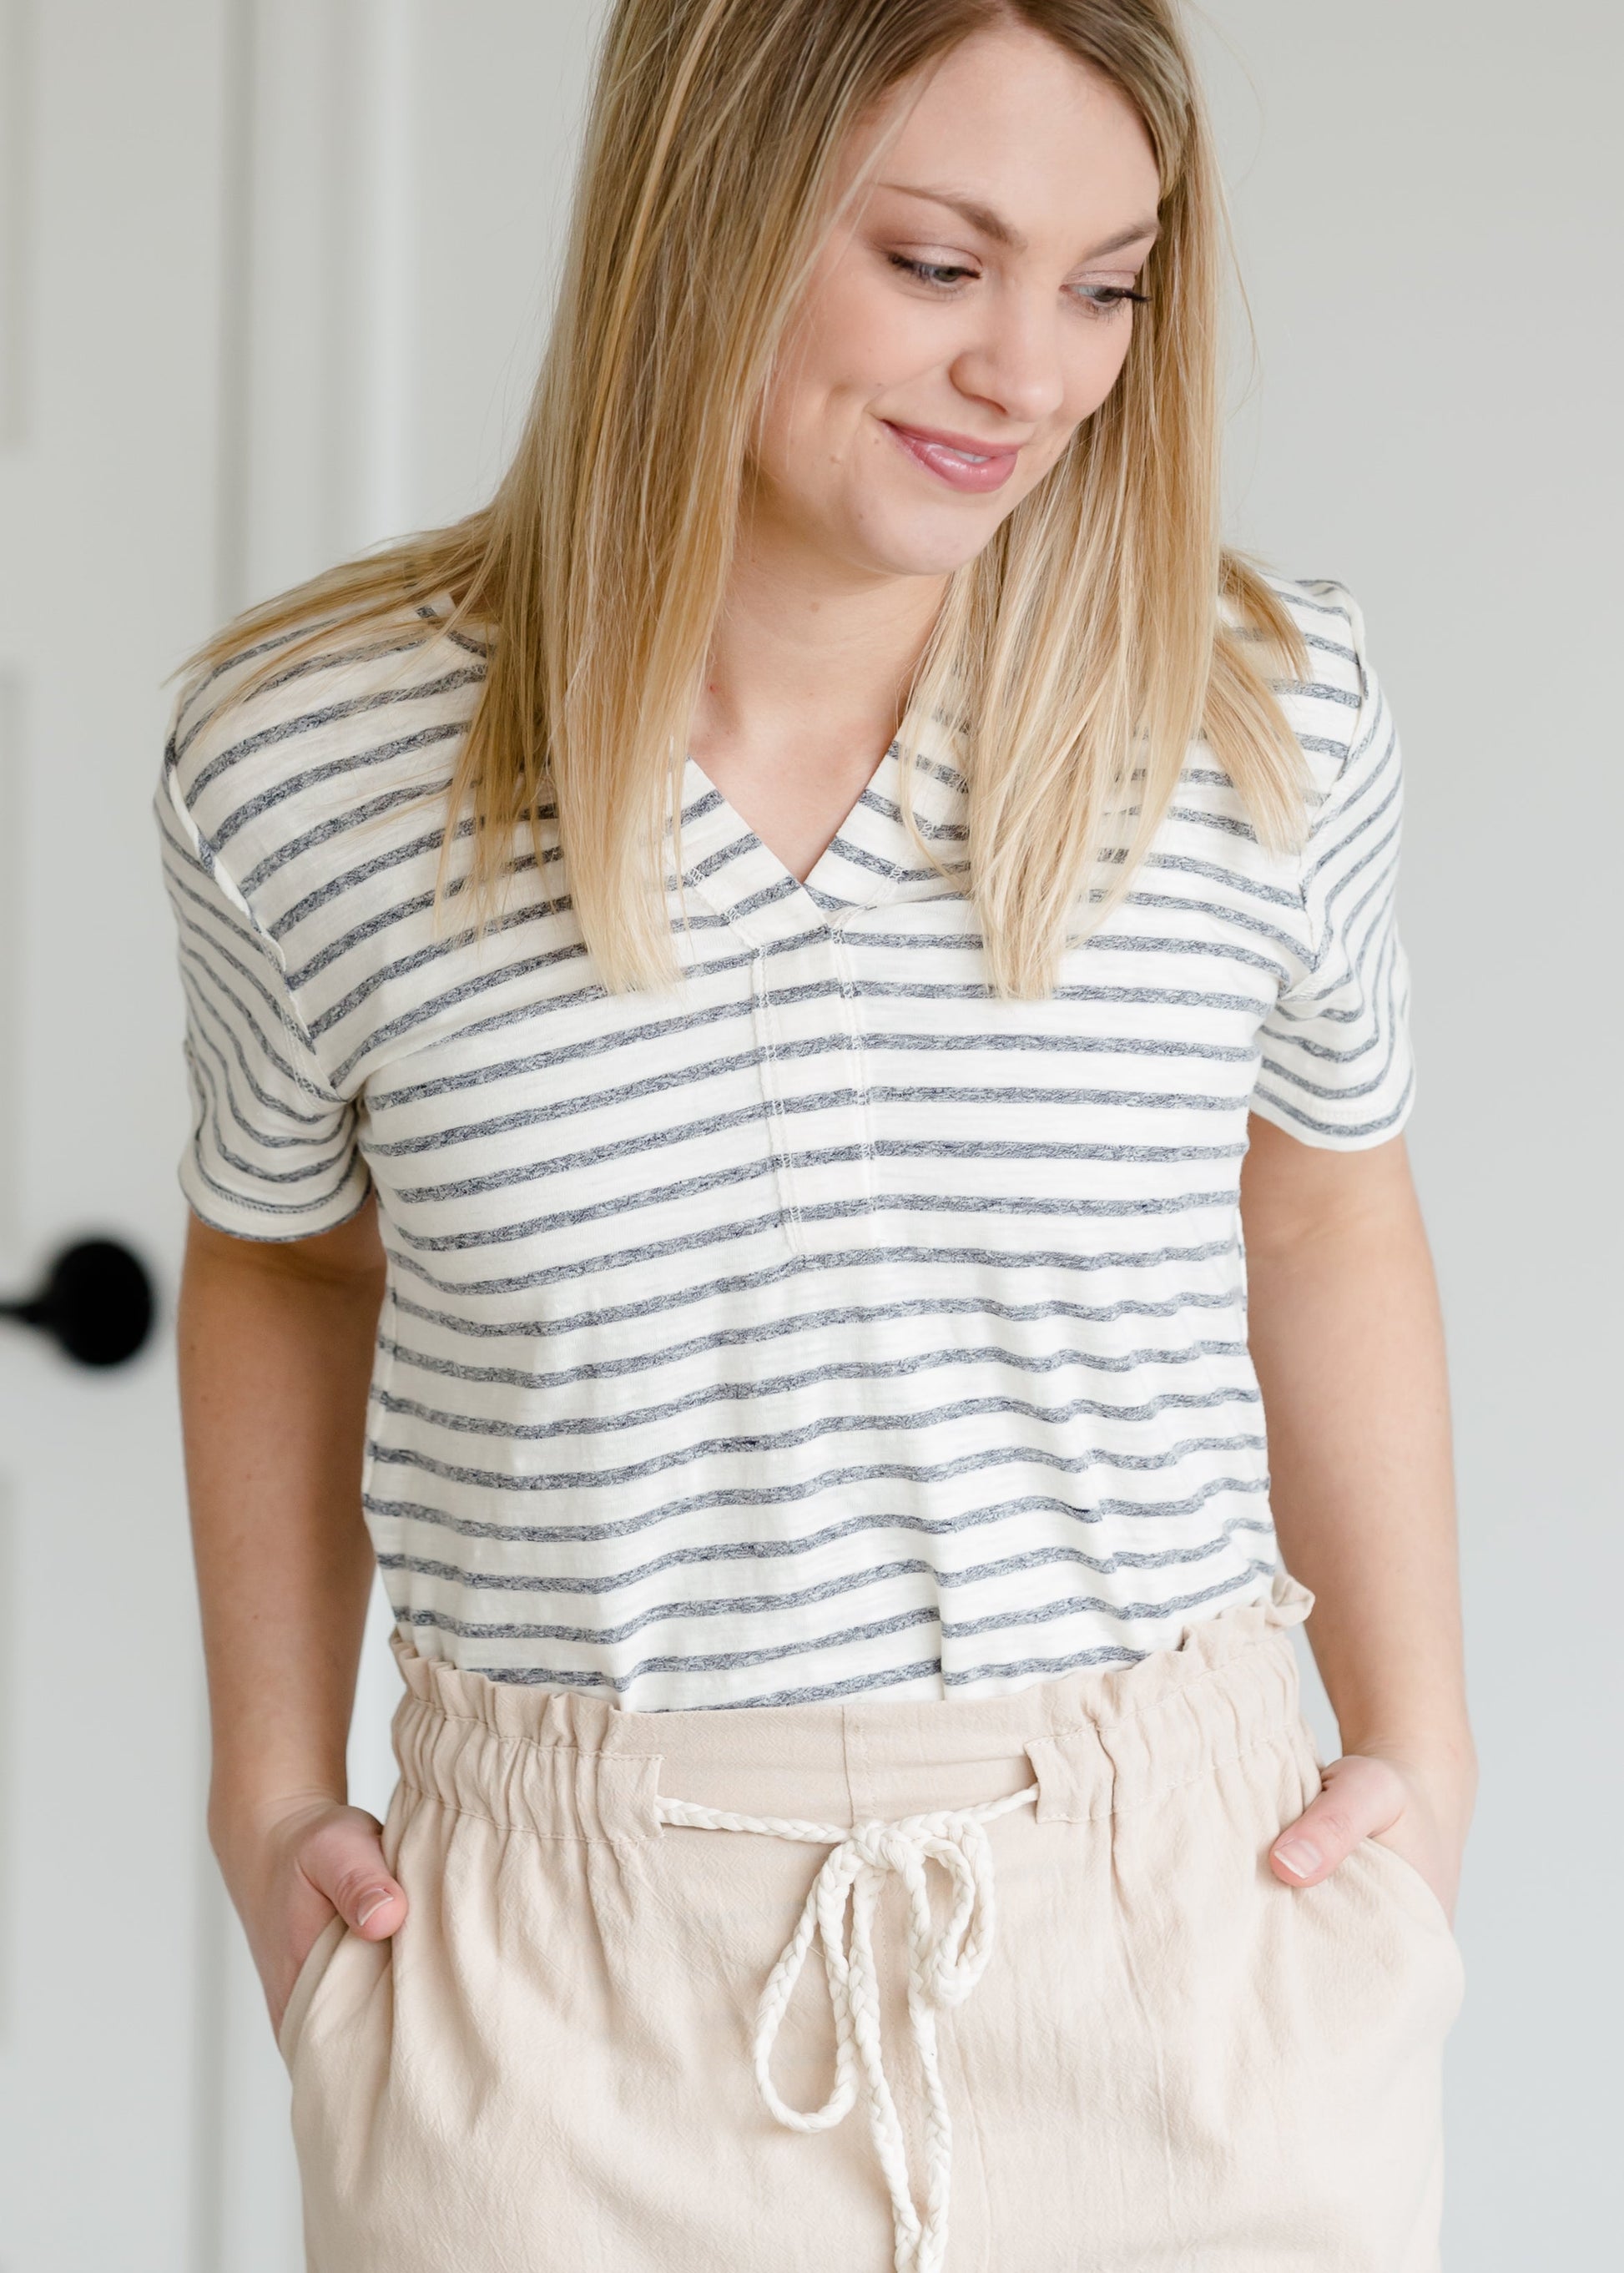 Knit Striped Short Sleeve Top - FINAL SALE Tops